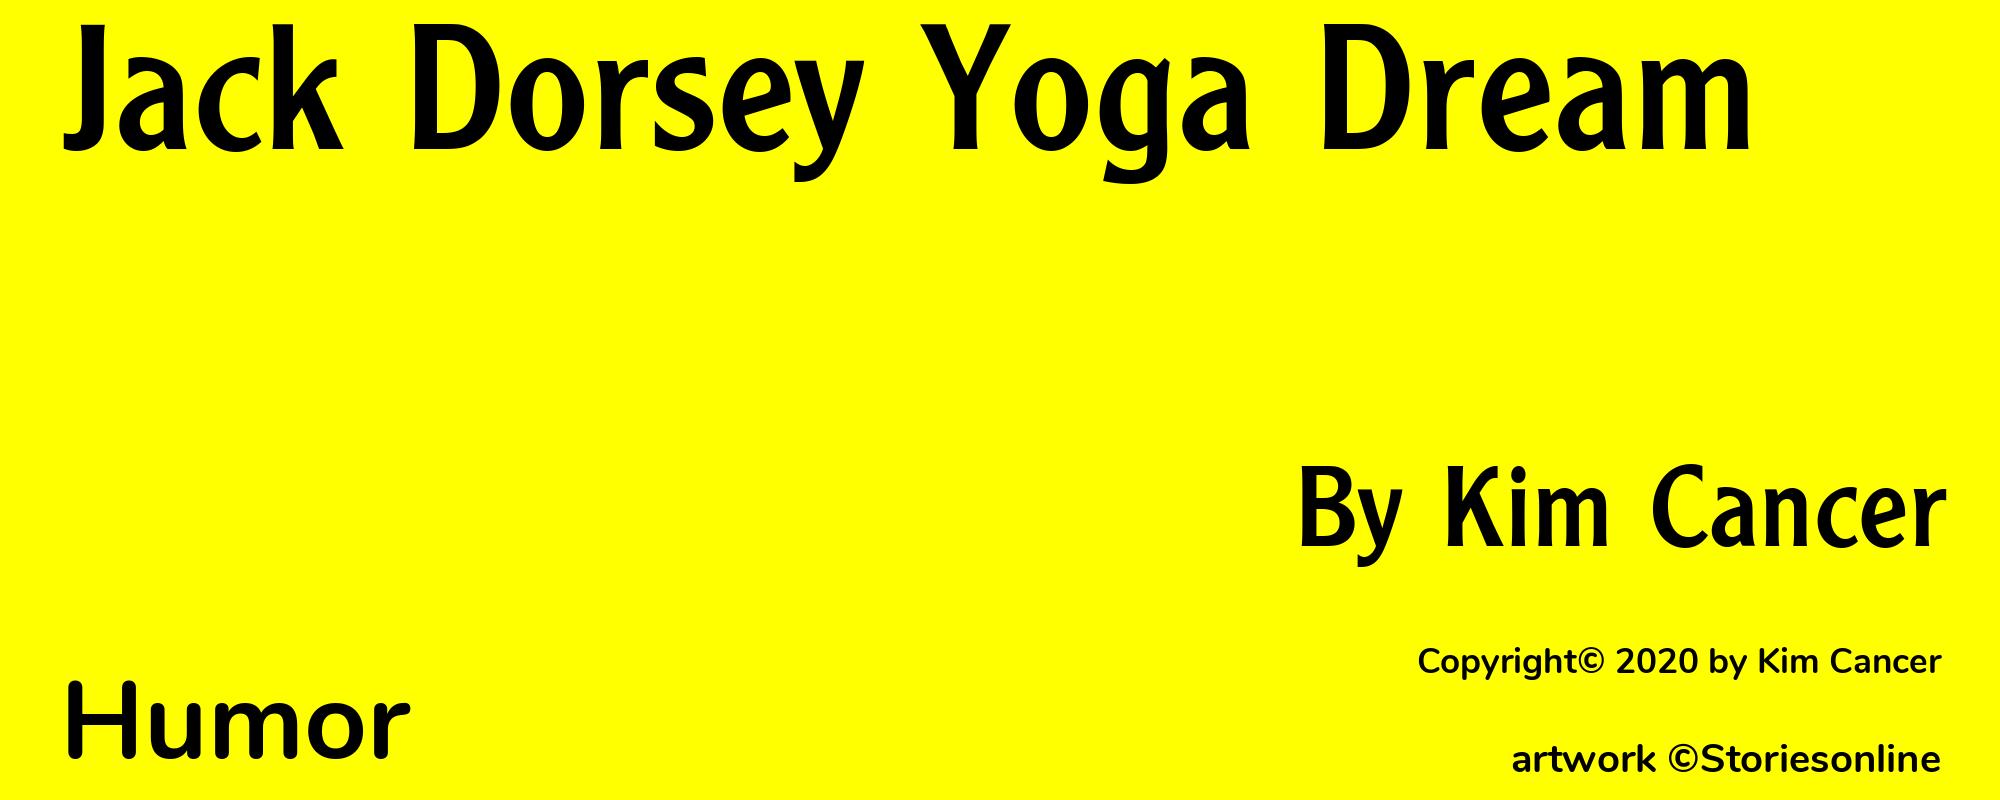 Jack Dorsey Yoga Dream - Cover